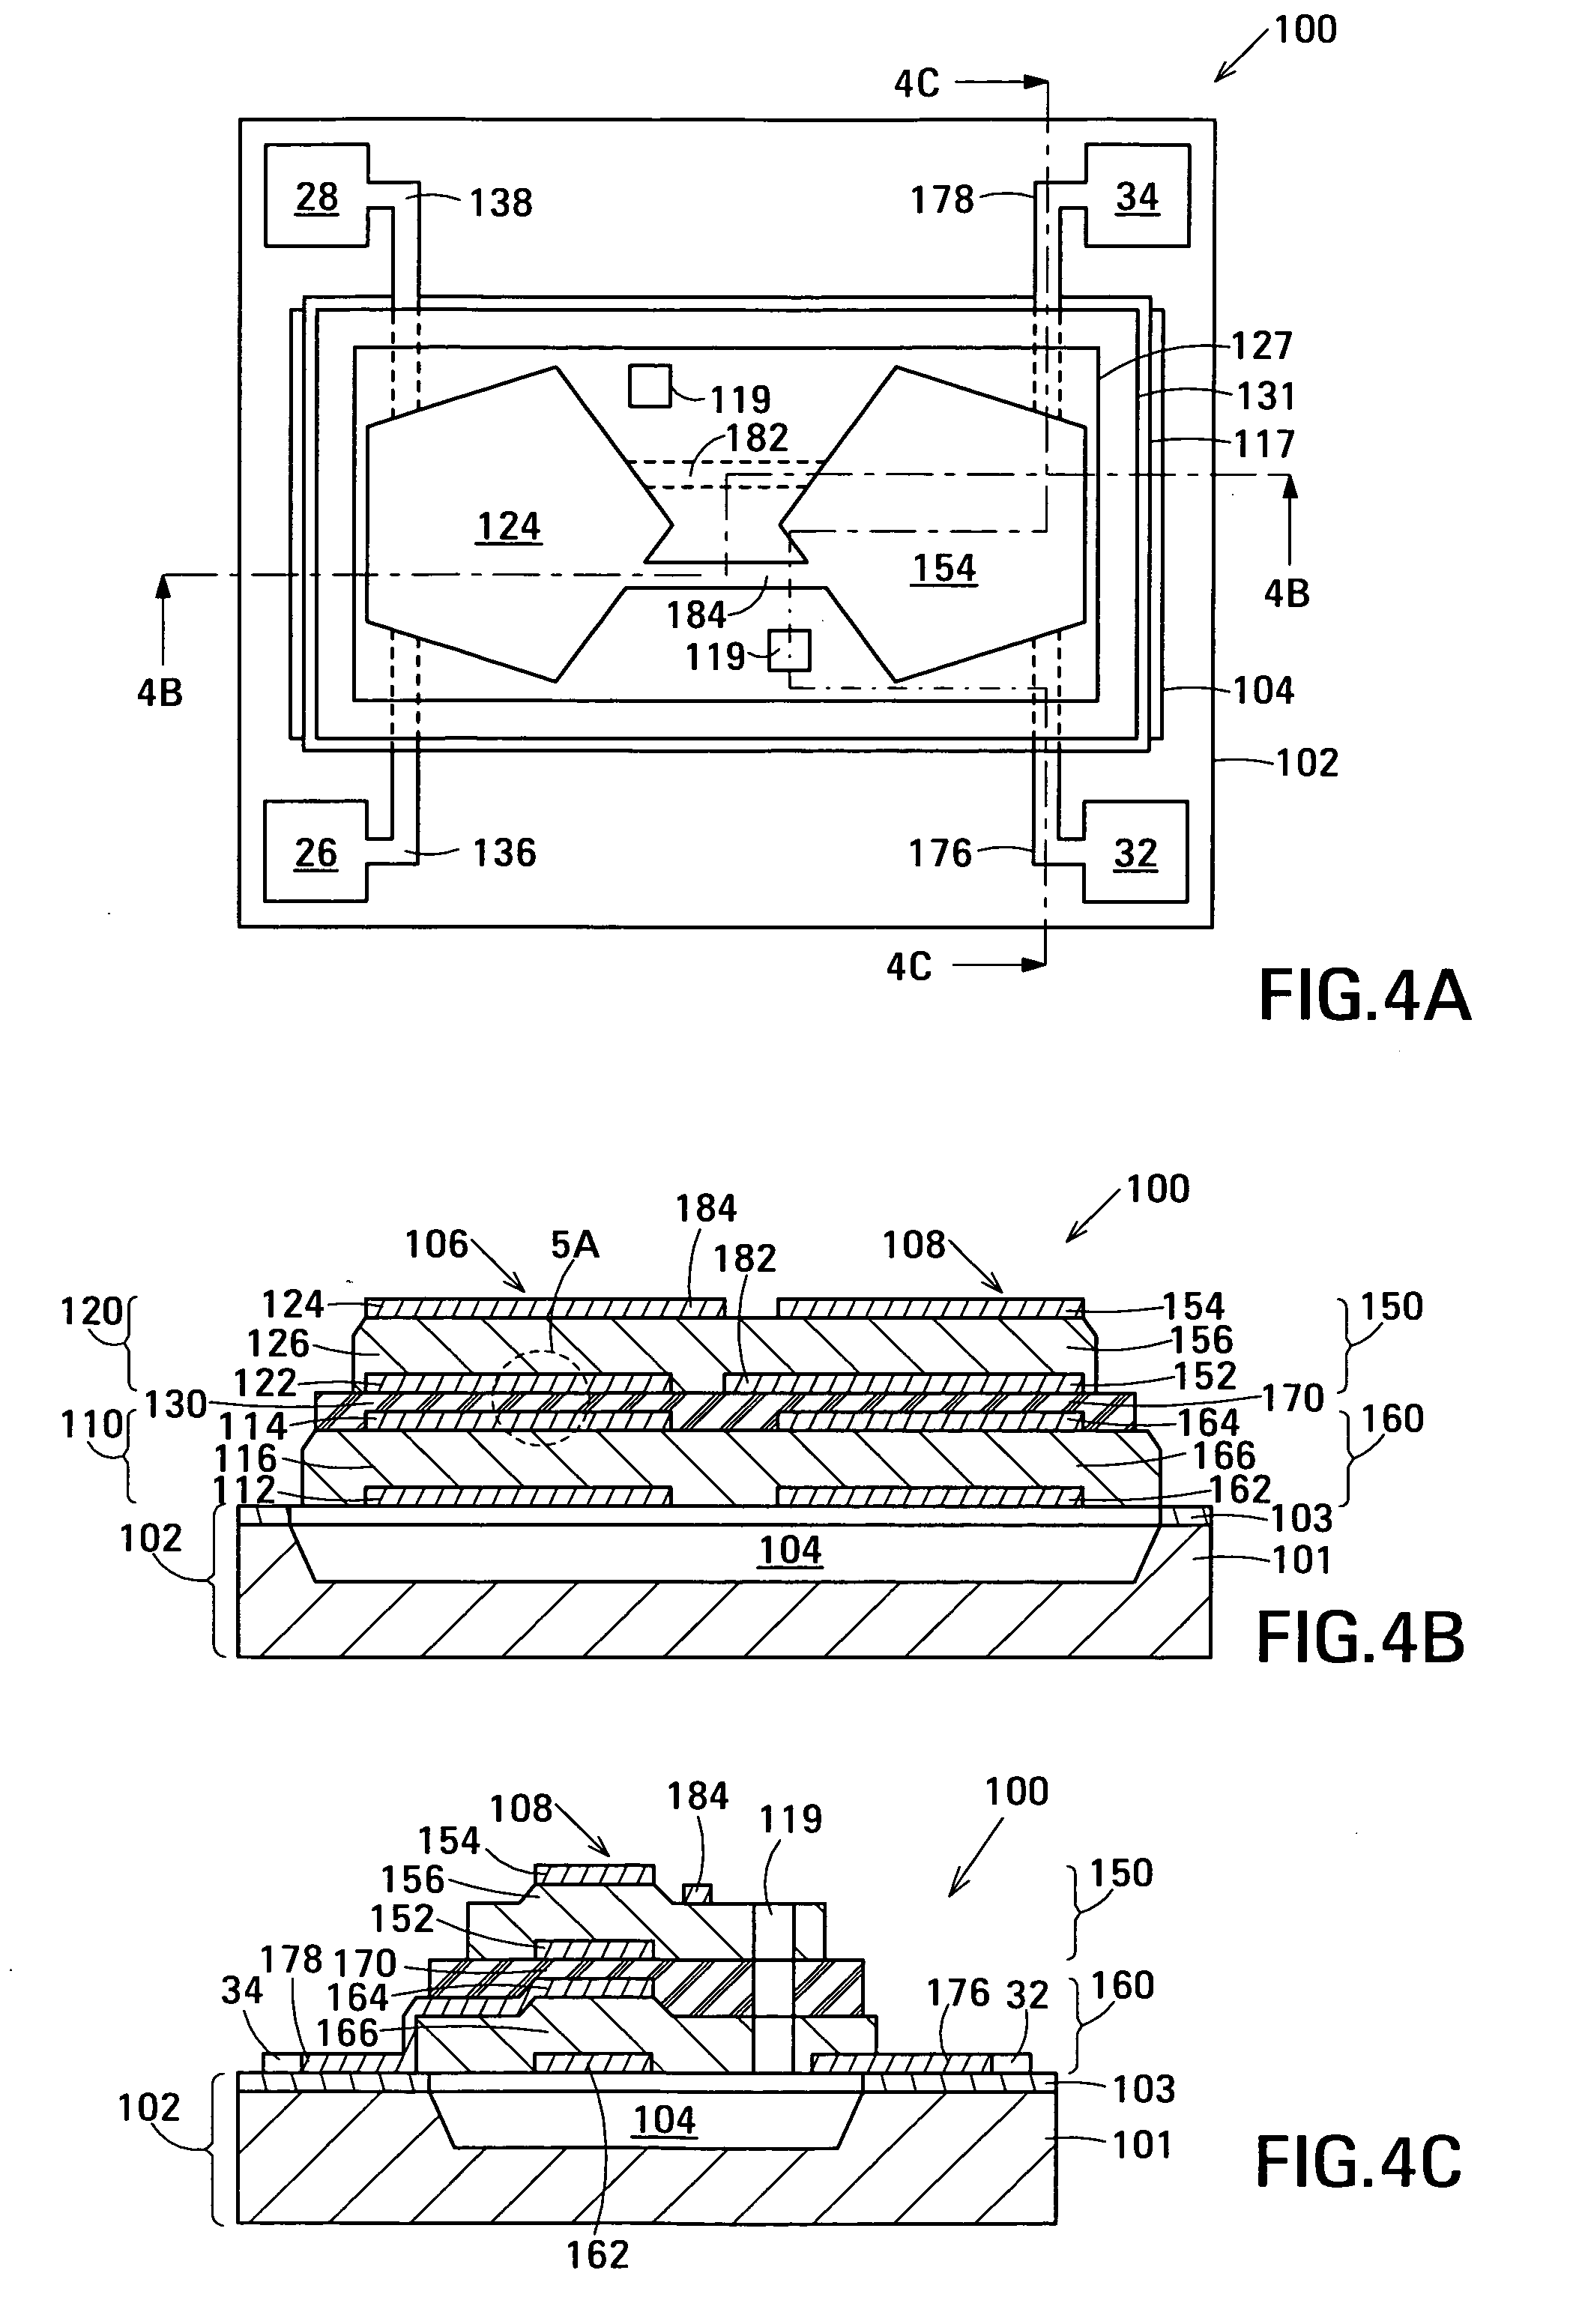 Acoustic galvanic isolator incorporating series-connected decoupled stacked bulk acoustic resonators